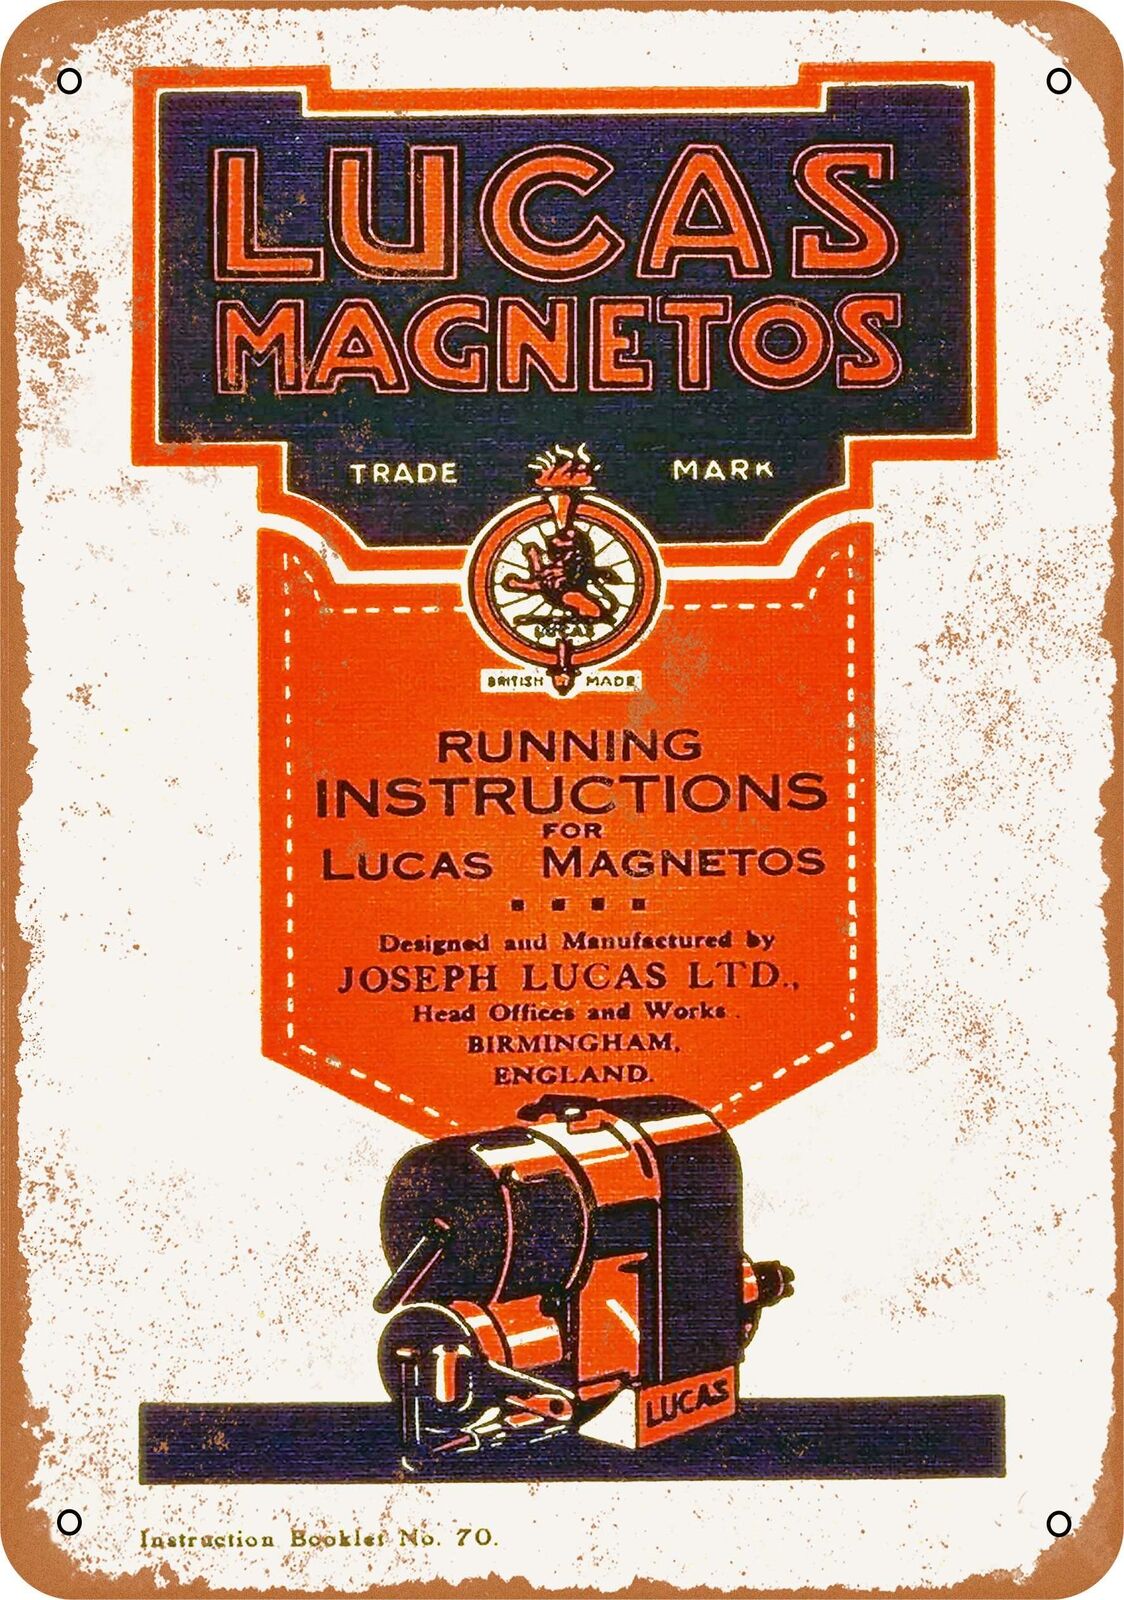 Metal Sign - 1913 Lucas Magnetos - Vintage Look Reproduction